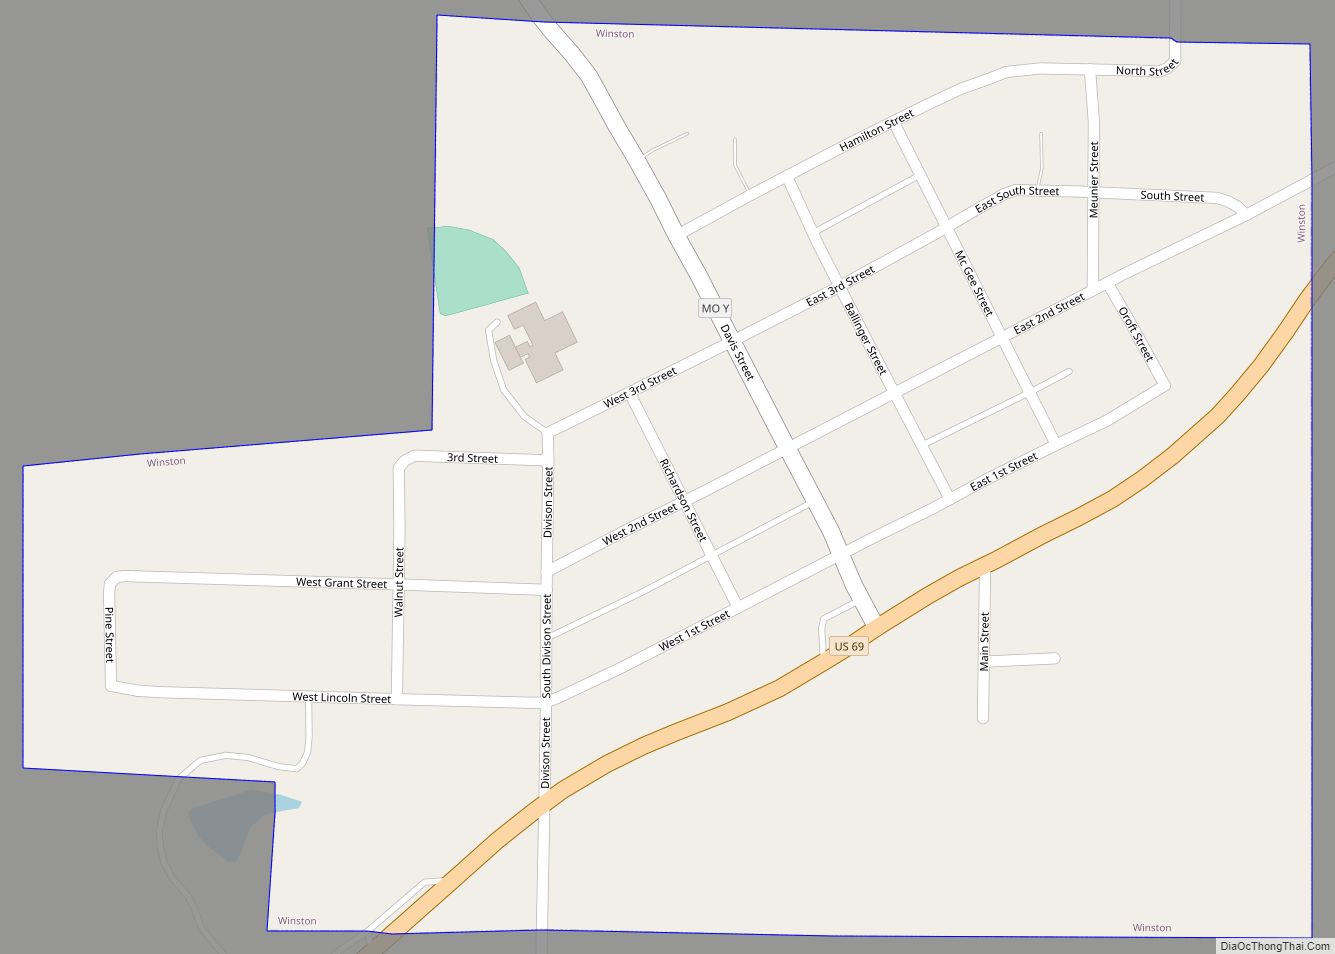 Map of Winston village